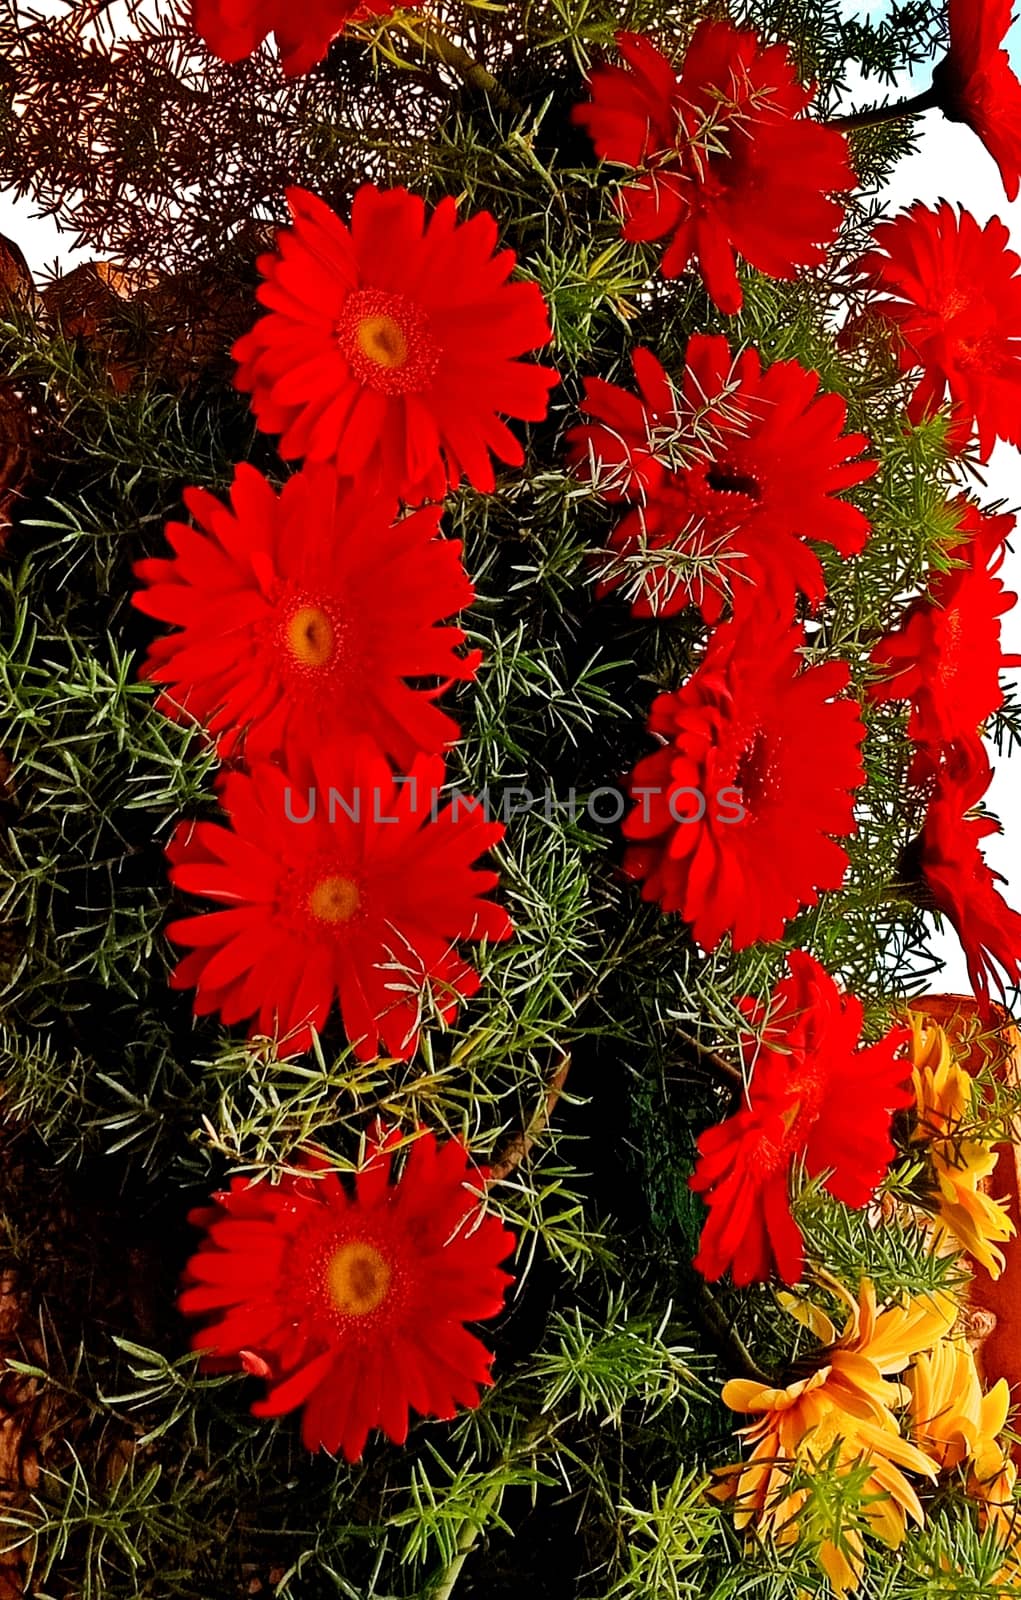 Bunch of beautiful flowers by ravindrabhu165165@gmail.com